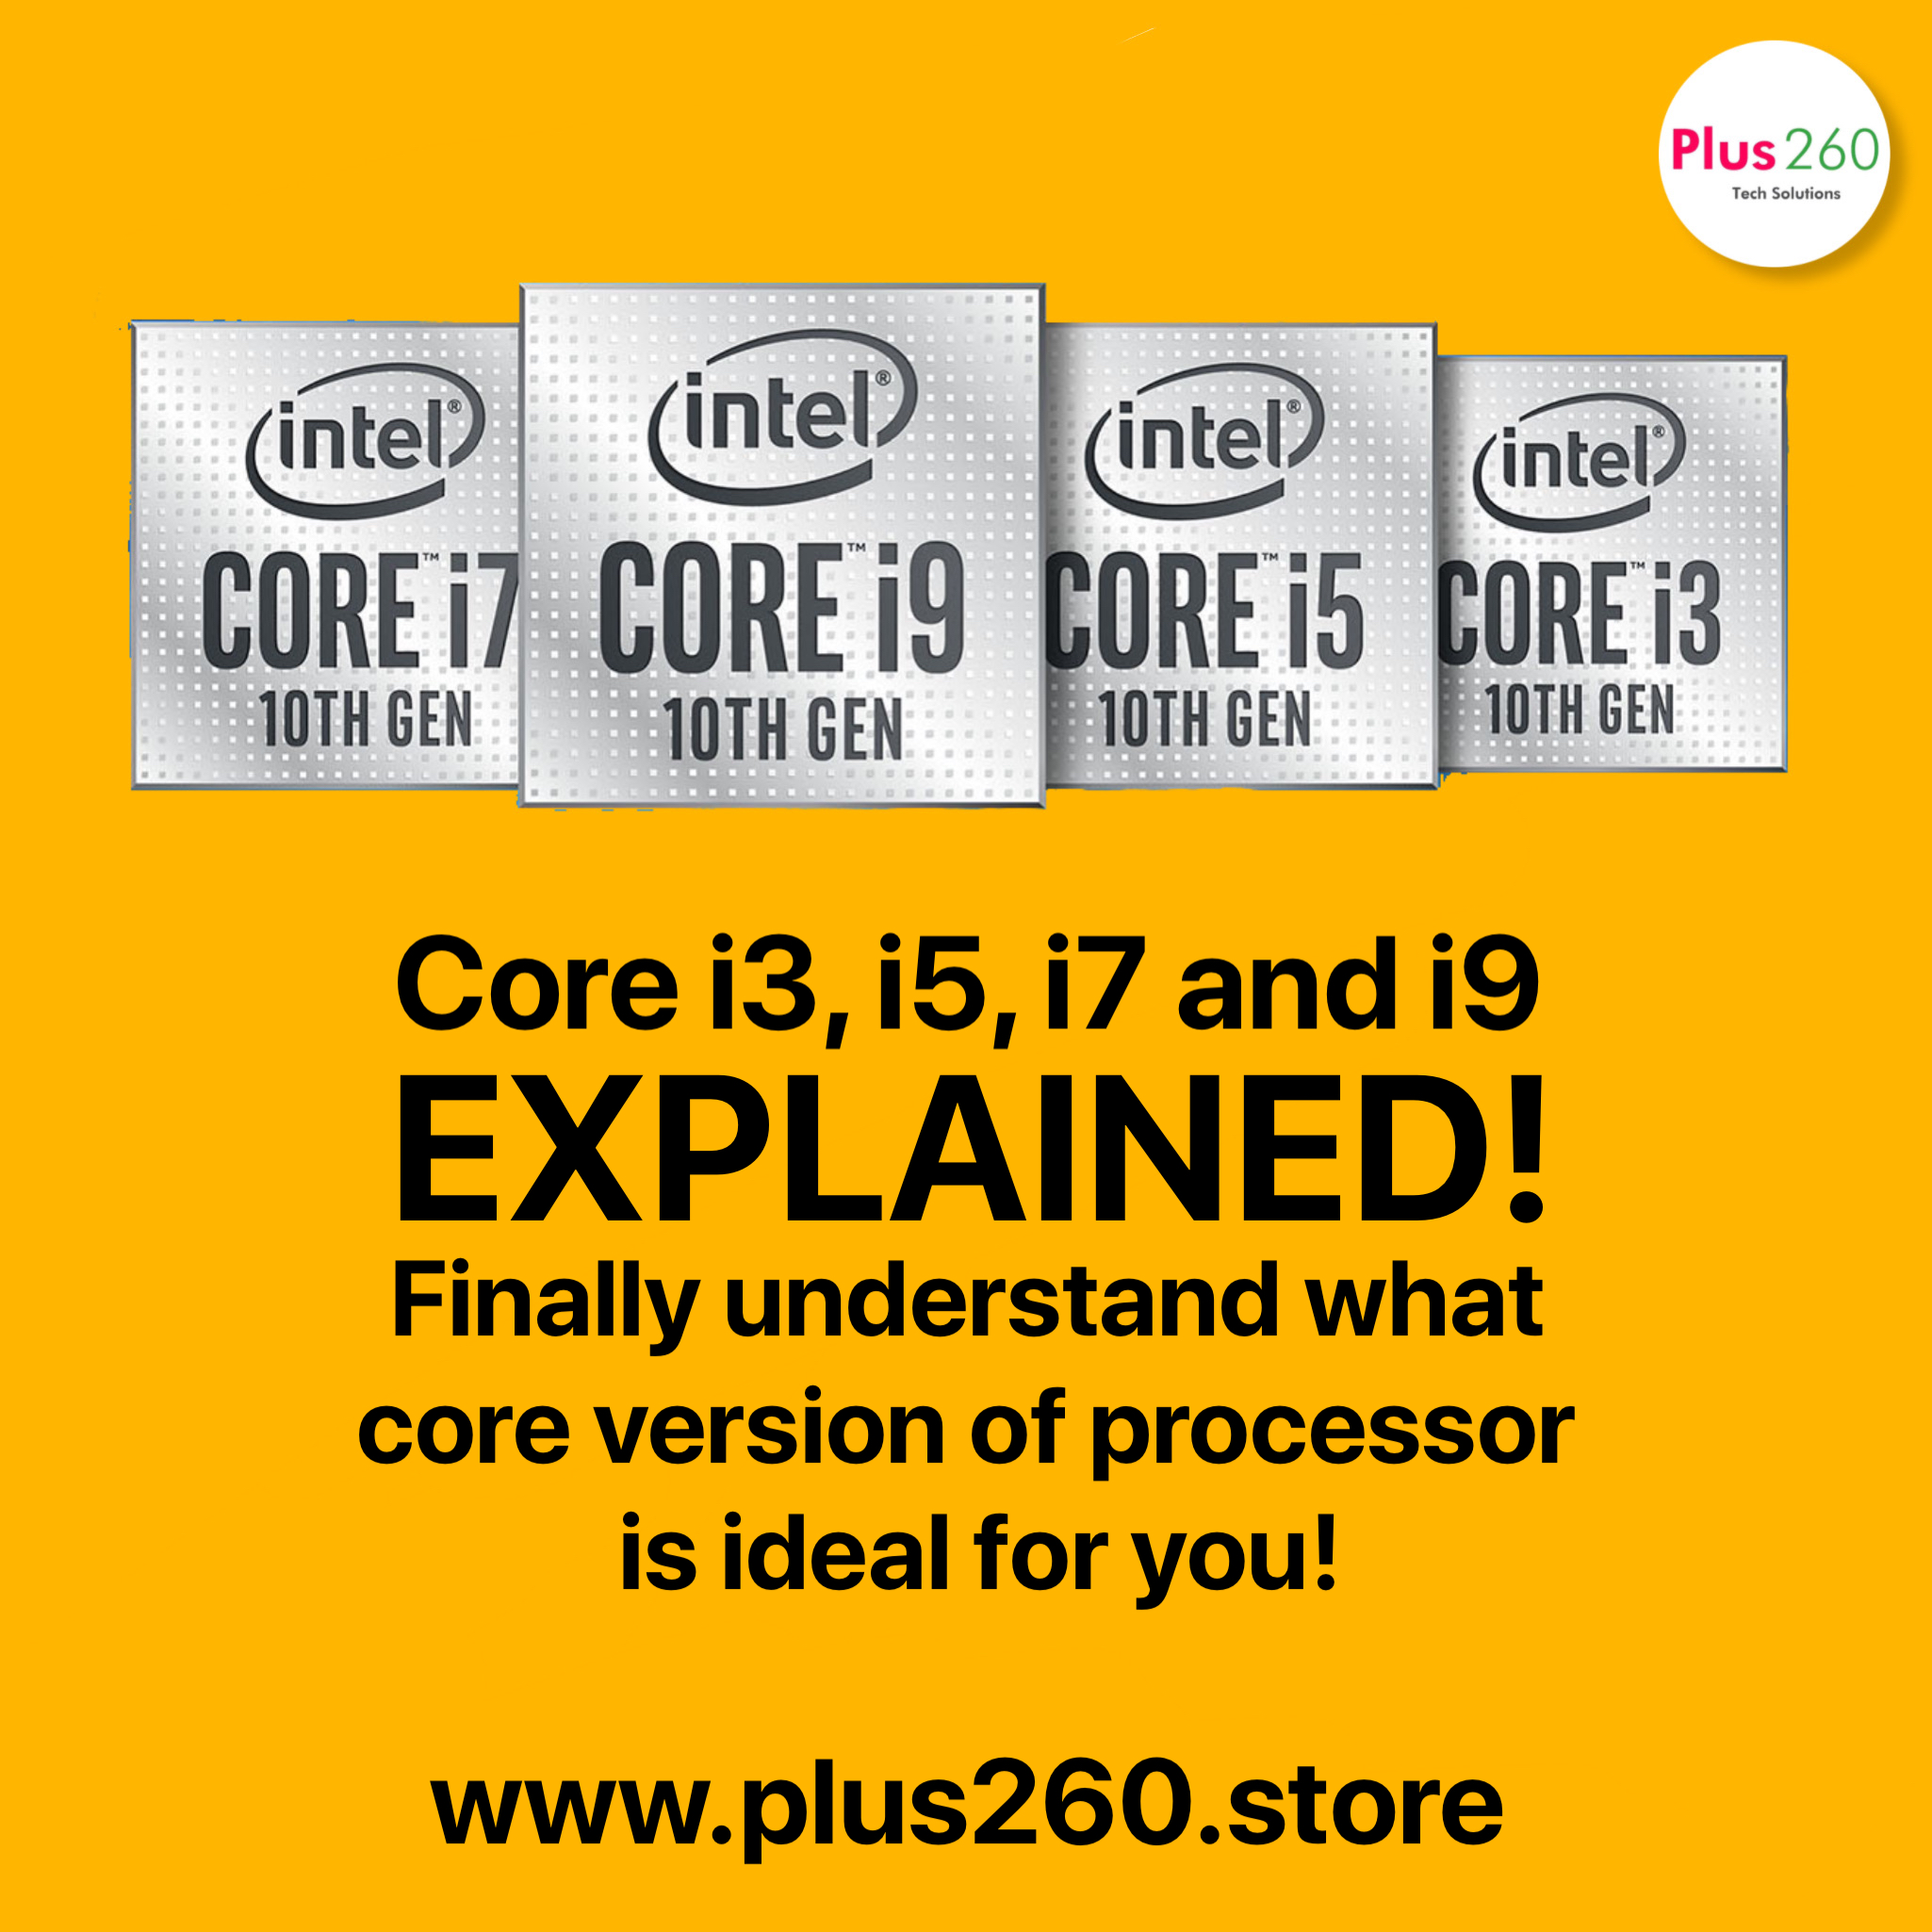 Core i3, i5, i7 and i9 explained - Plus260 Tech Solutions